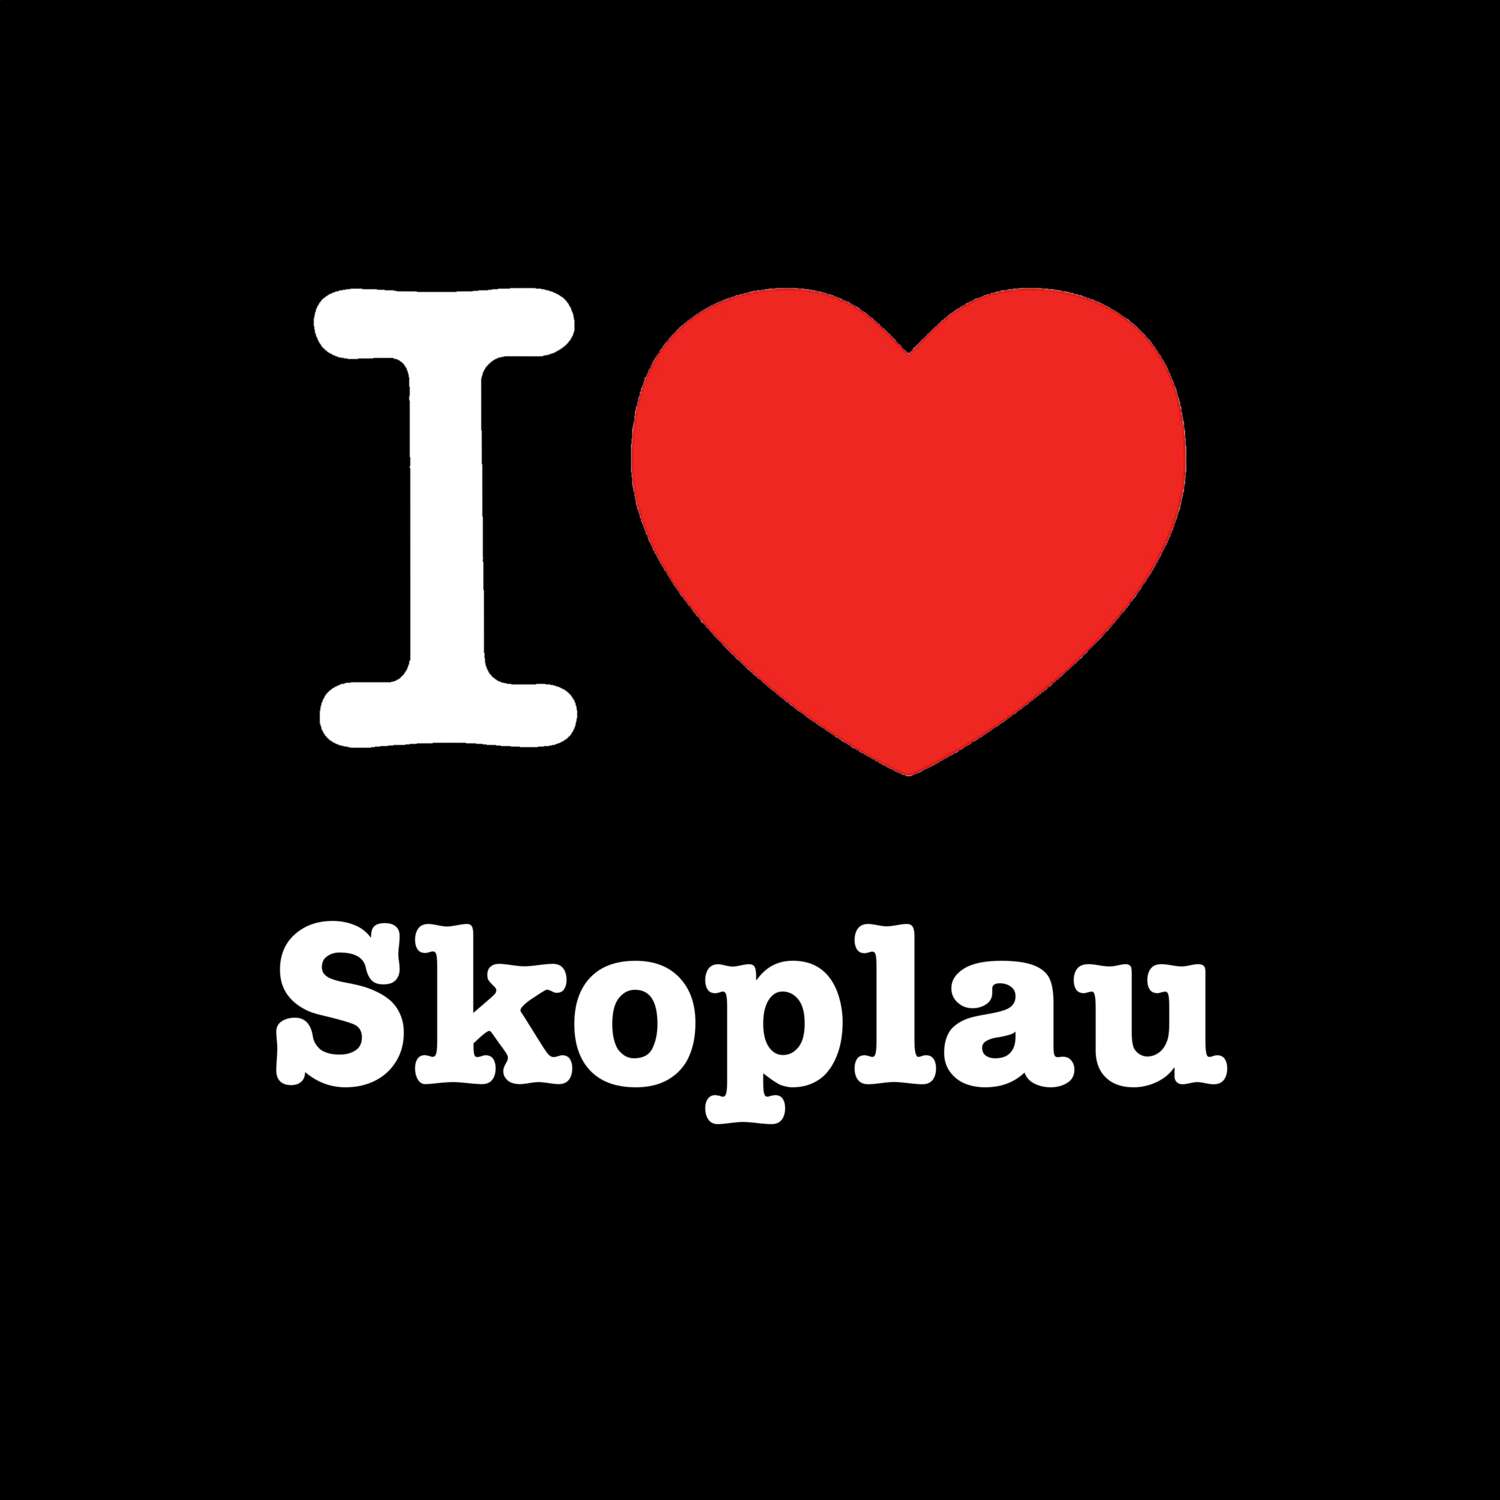 Skoplau T-Shirt »I love«